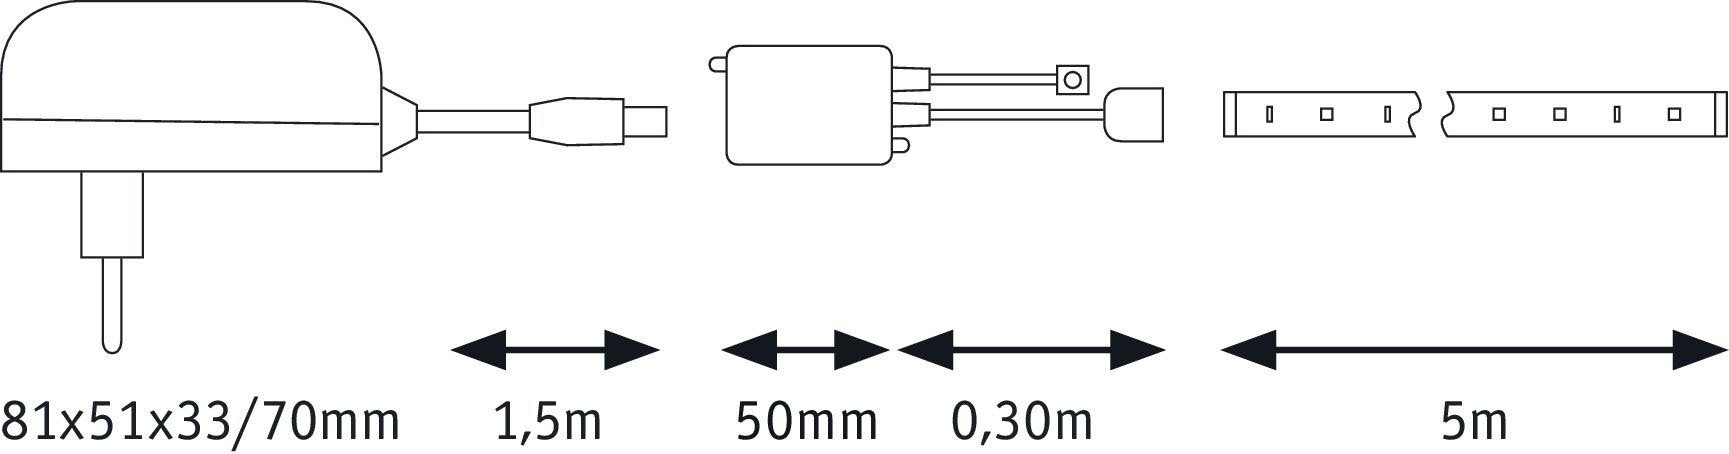 LED-Streifen RGB Weiß SimpLED 1-flammig, FN DC, 5m, Metall, Paulmann 20W, Set Strip, 230/12V, Kst